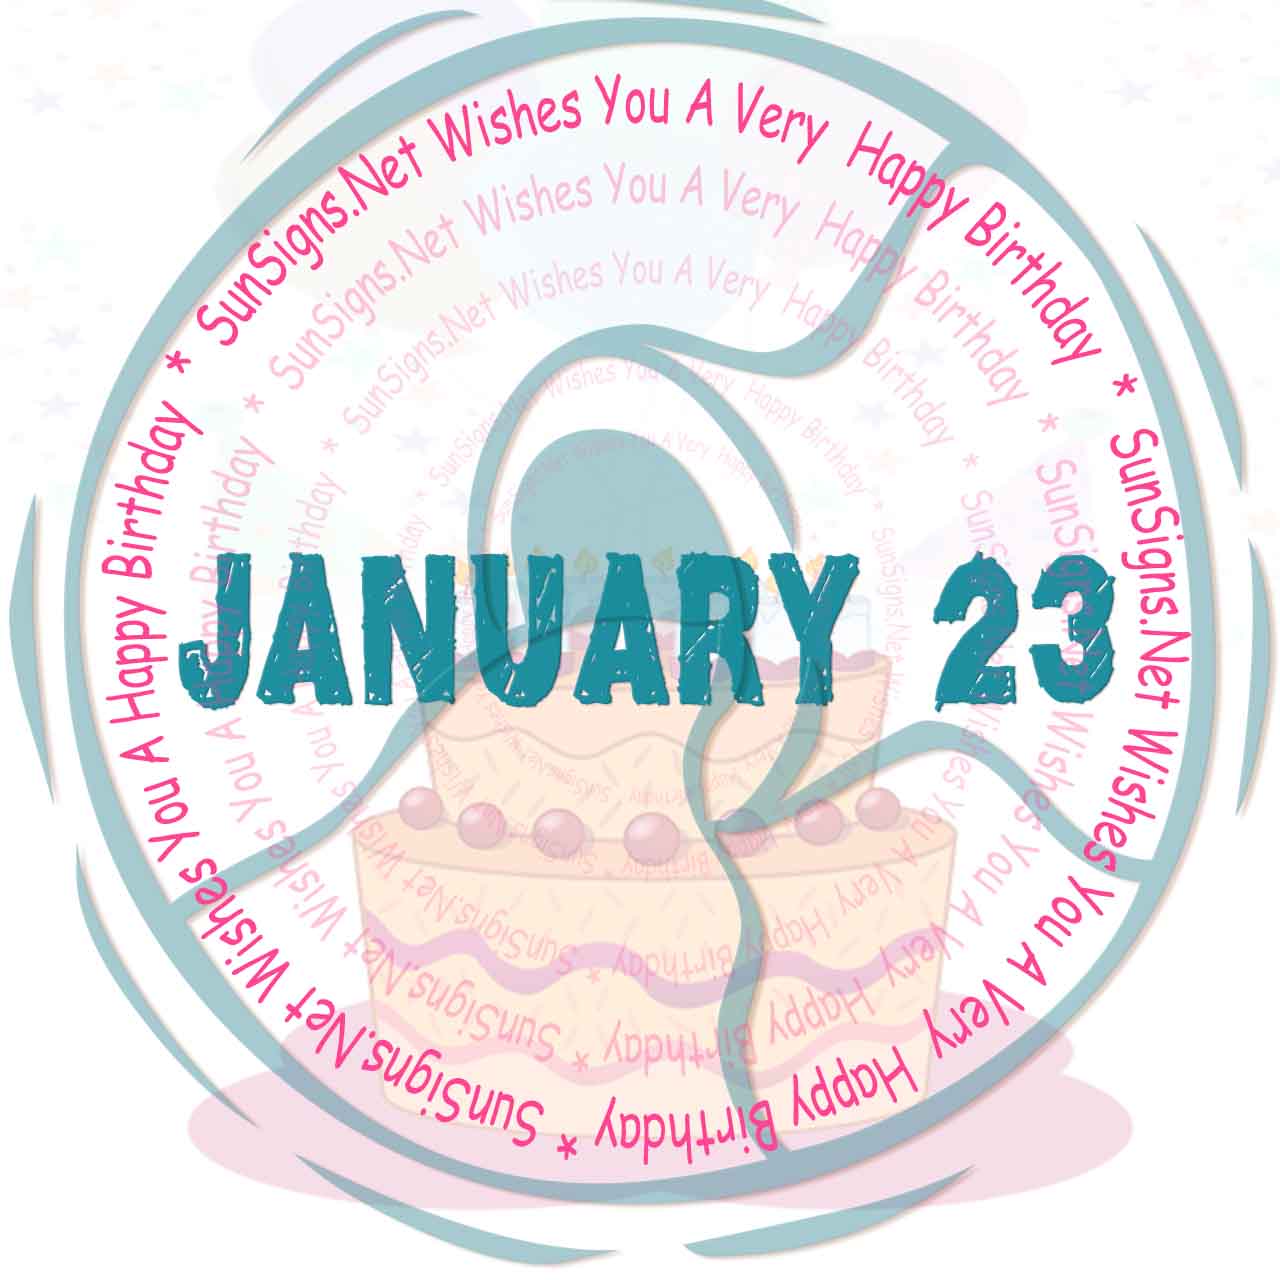 January 23 Zodiac Is Aquarius, Birthdays And Horoscope Zodiac Signs 101